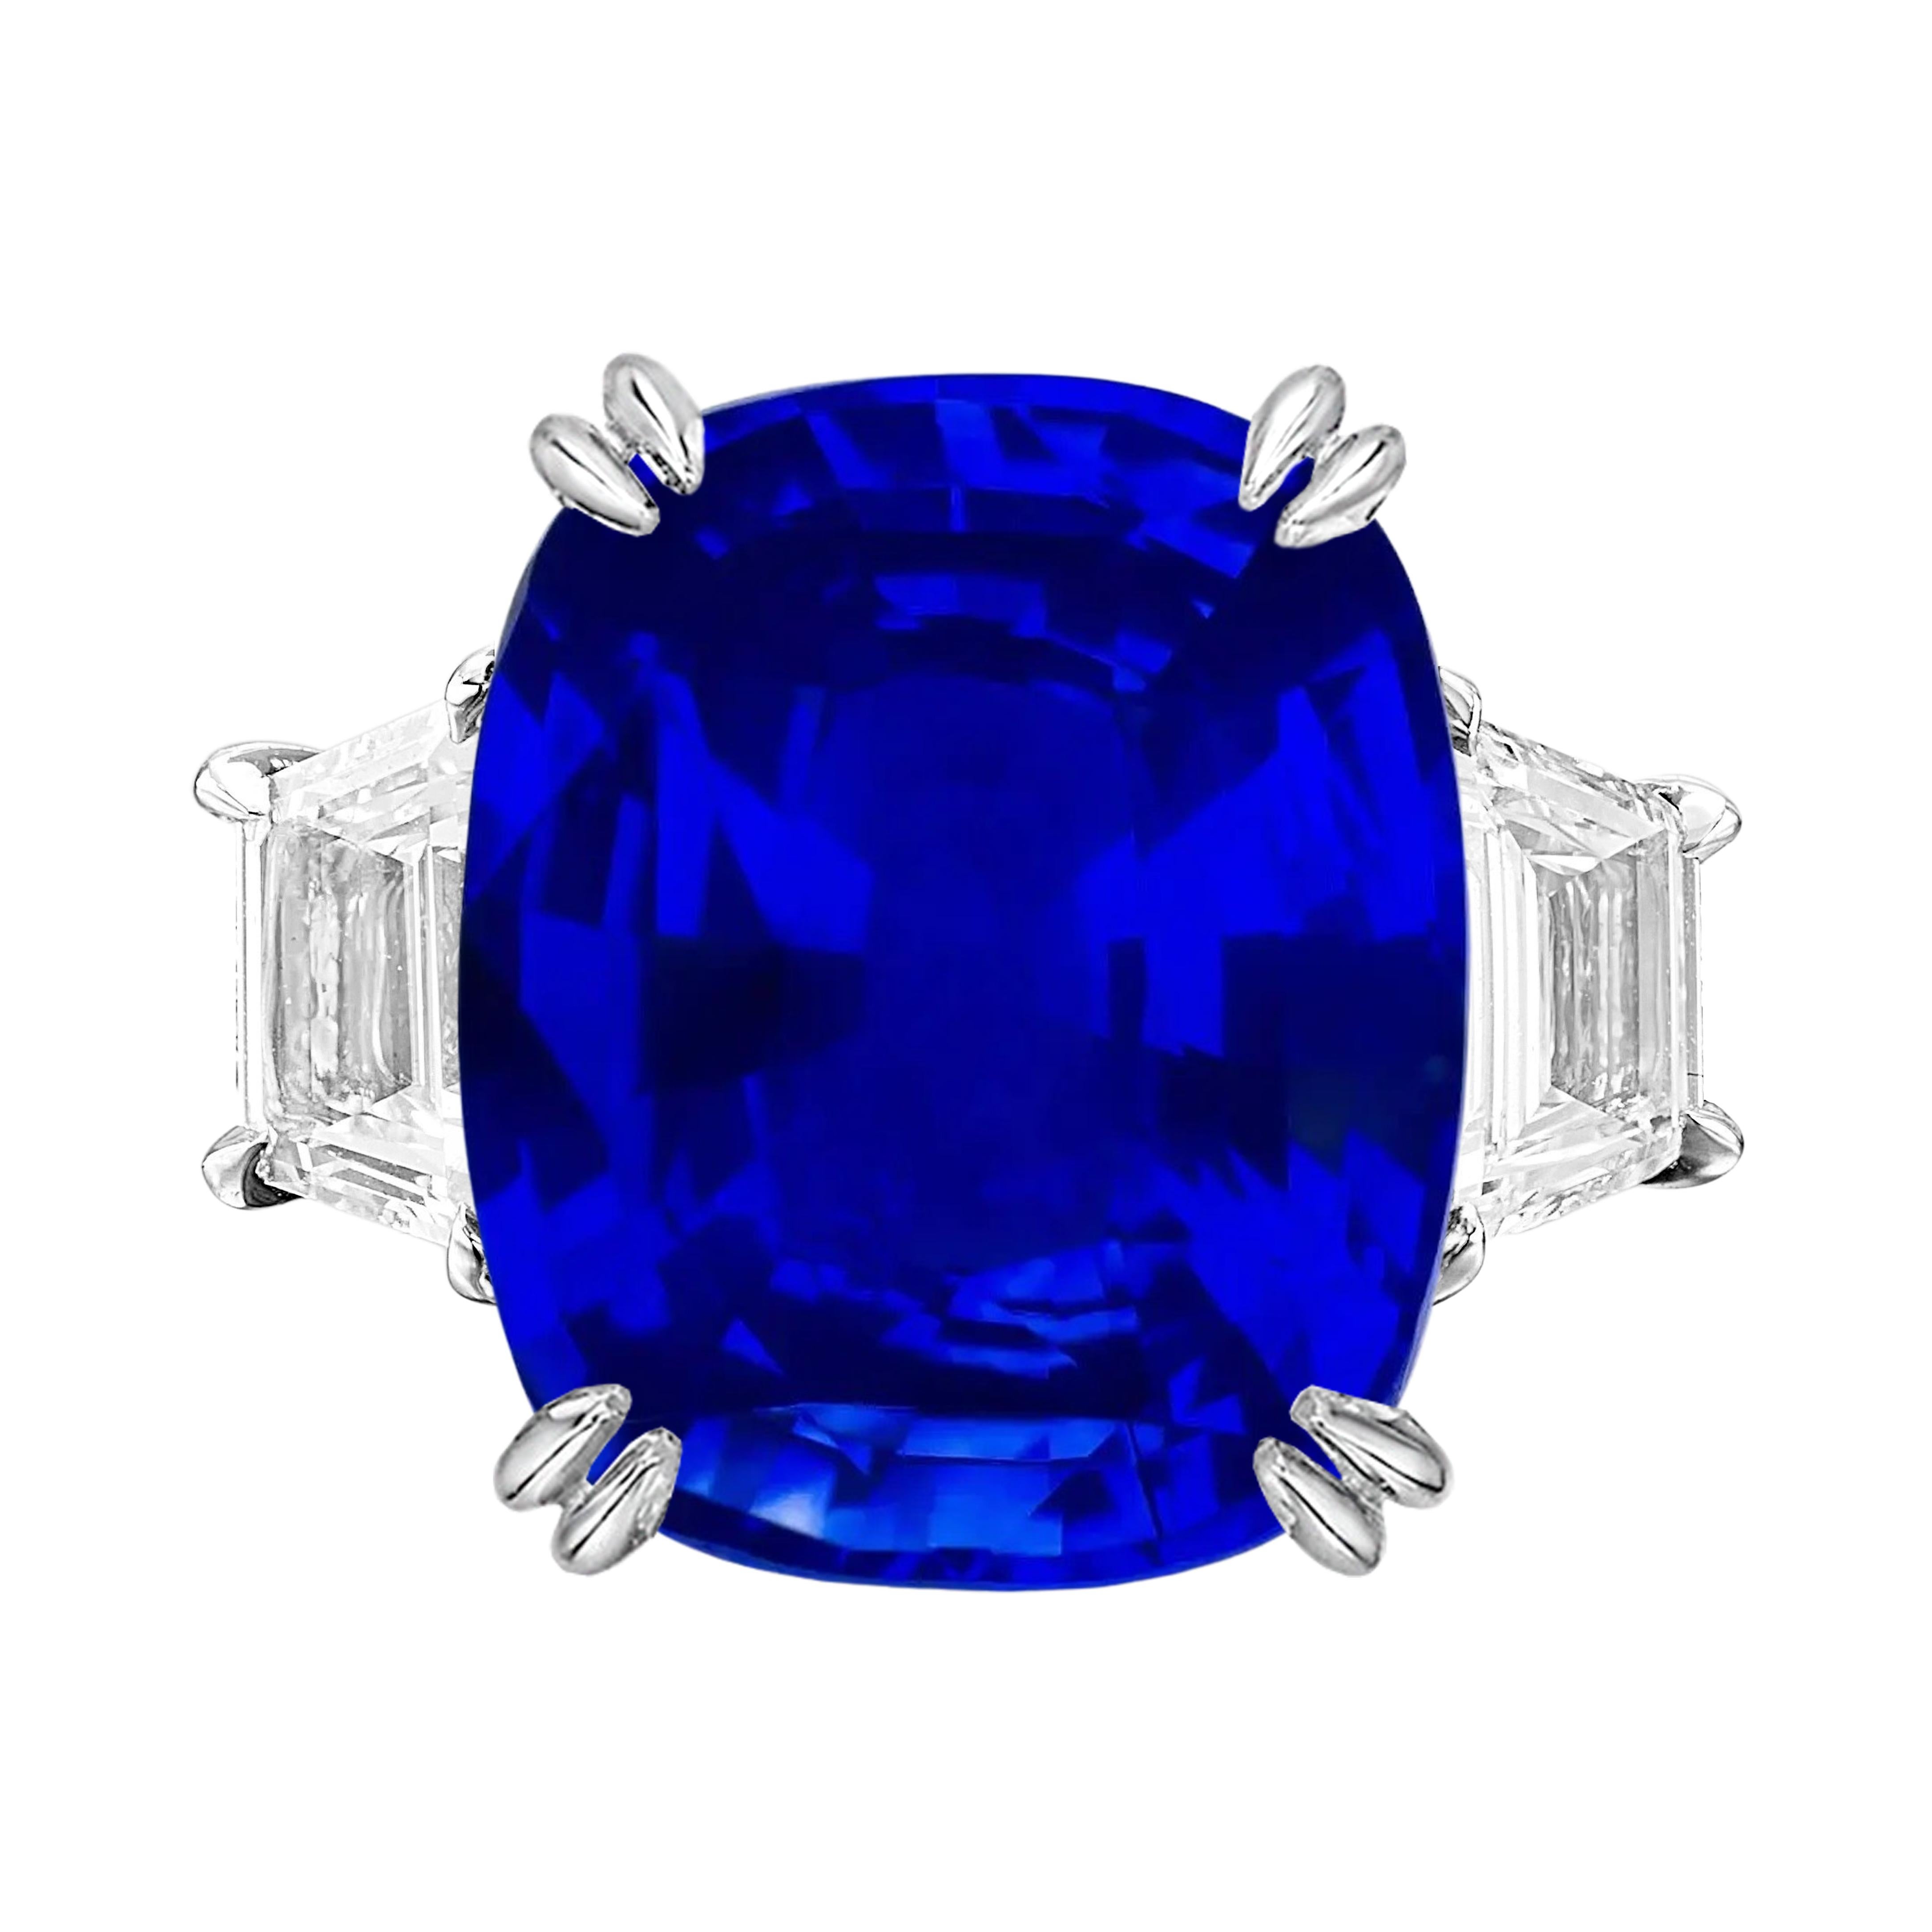 Modern SSEF Switzerland 7 Carat Blue Sapphire UNHEATED Cushion Cut Diamond Ring For Sale